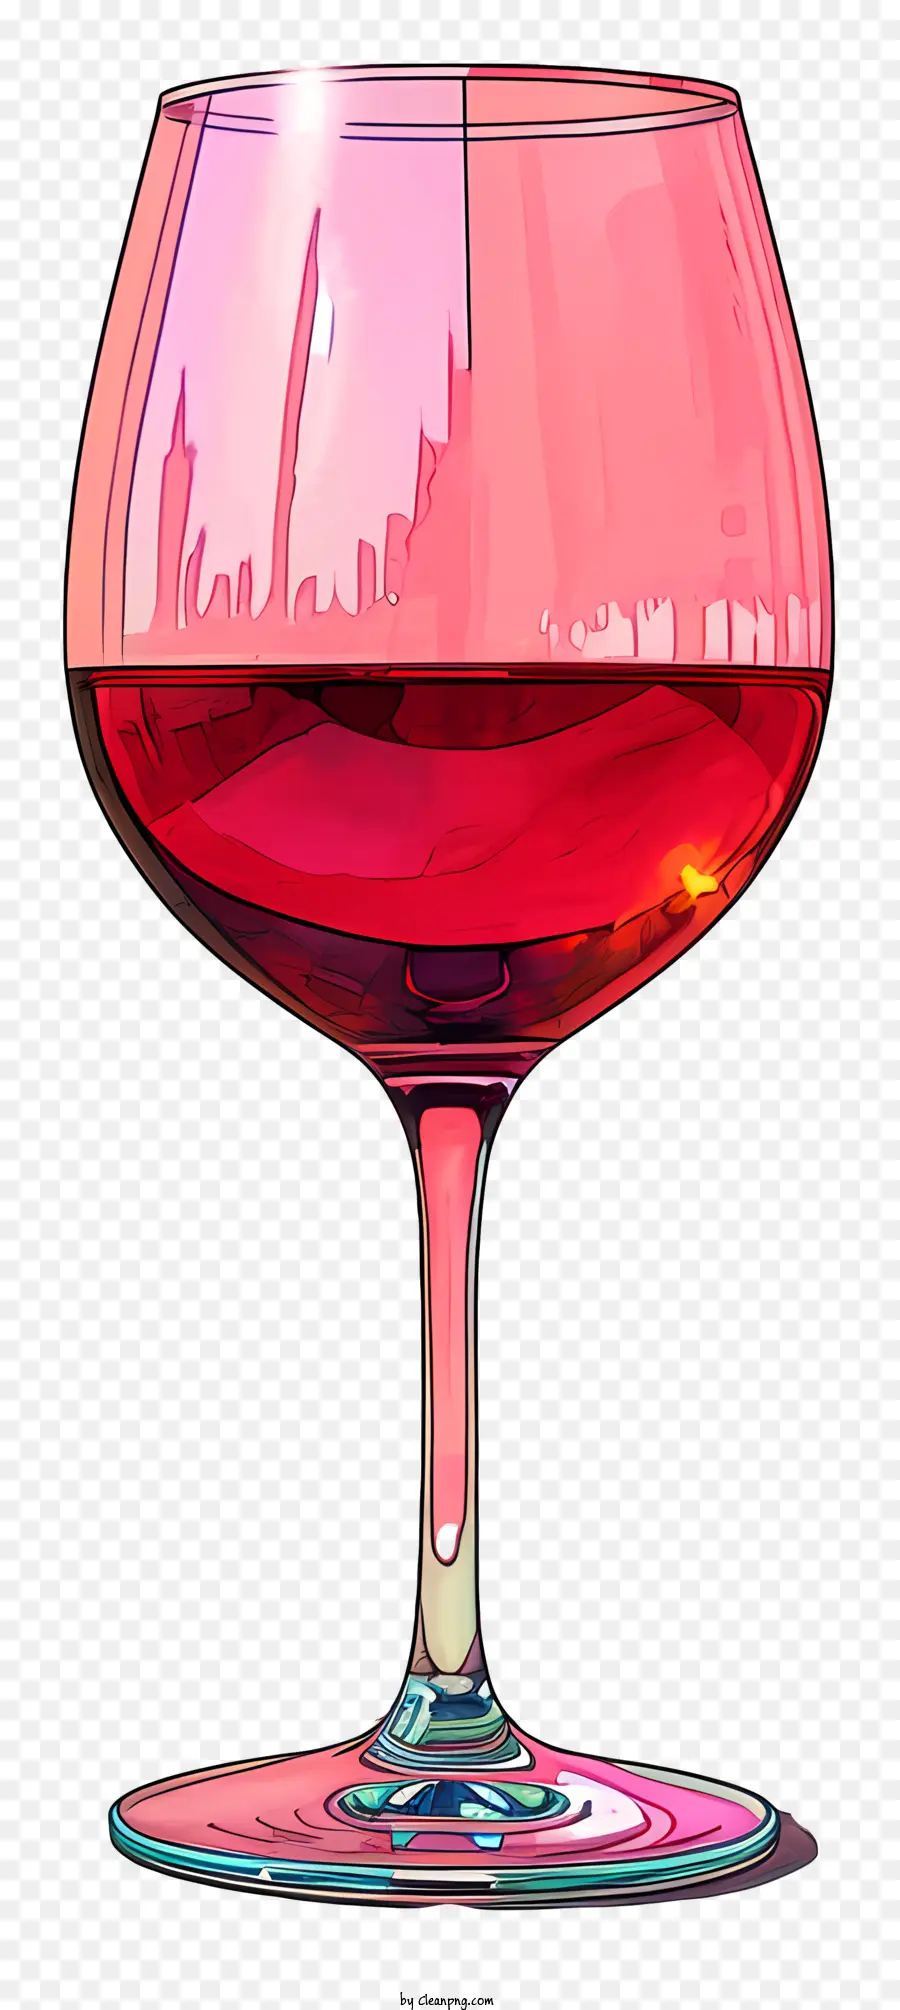 Rotweinglas rosa flüssiger, wolkig flüssiges flüssiges rosa Randglas - Rosa Flüssigkeit füllt runde Glas in Pink umgezogen